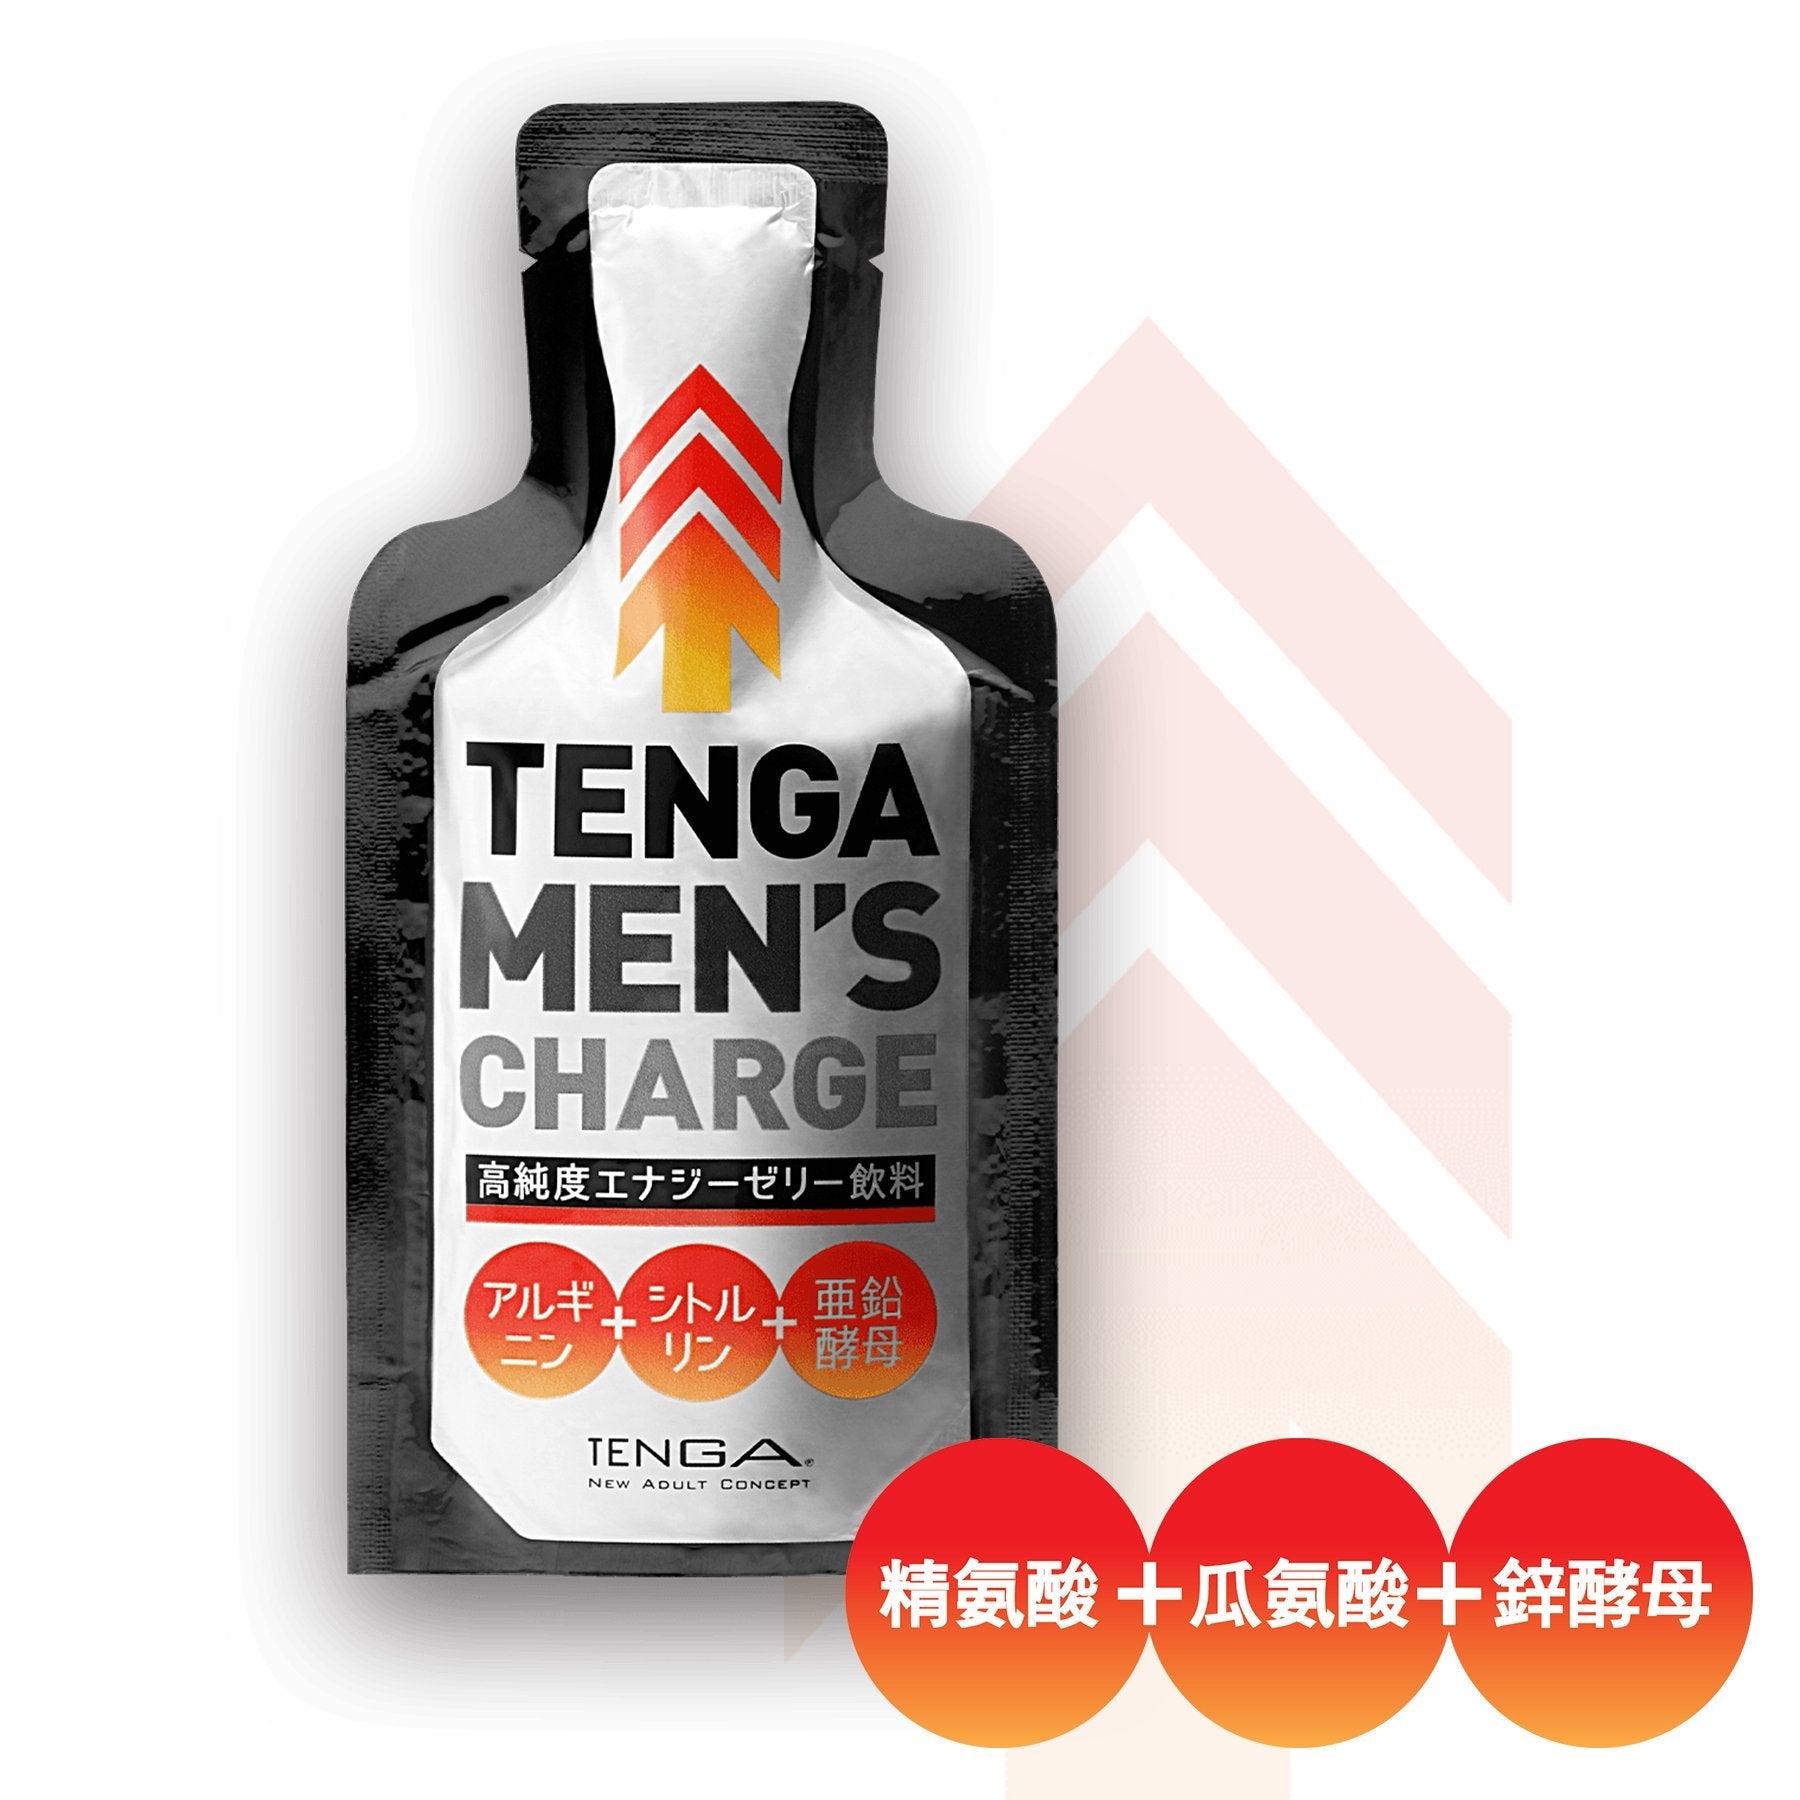 TENGA MEN'S CHARGE 高純度能量果凍飲料 - tengacharge